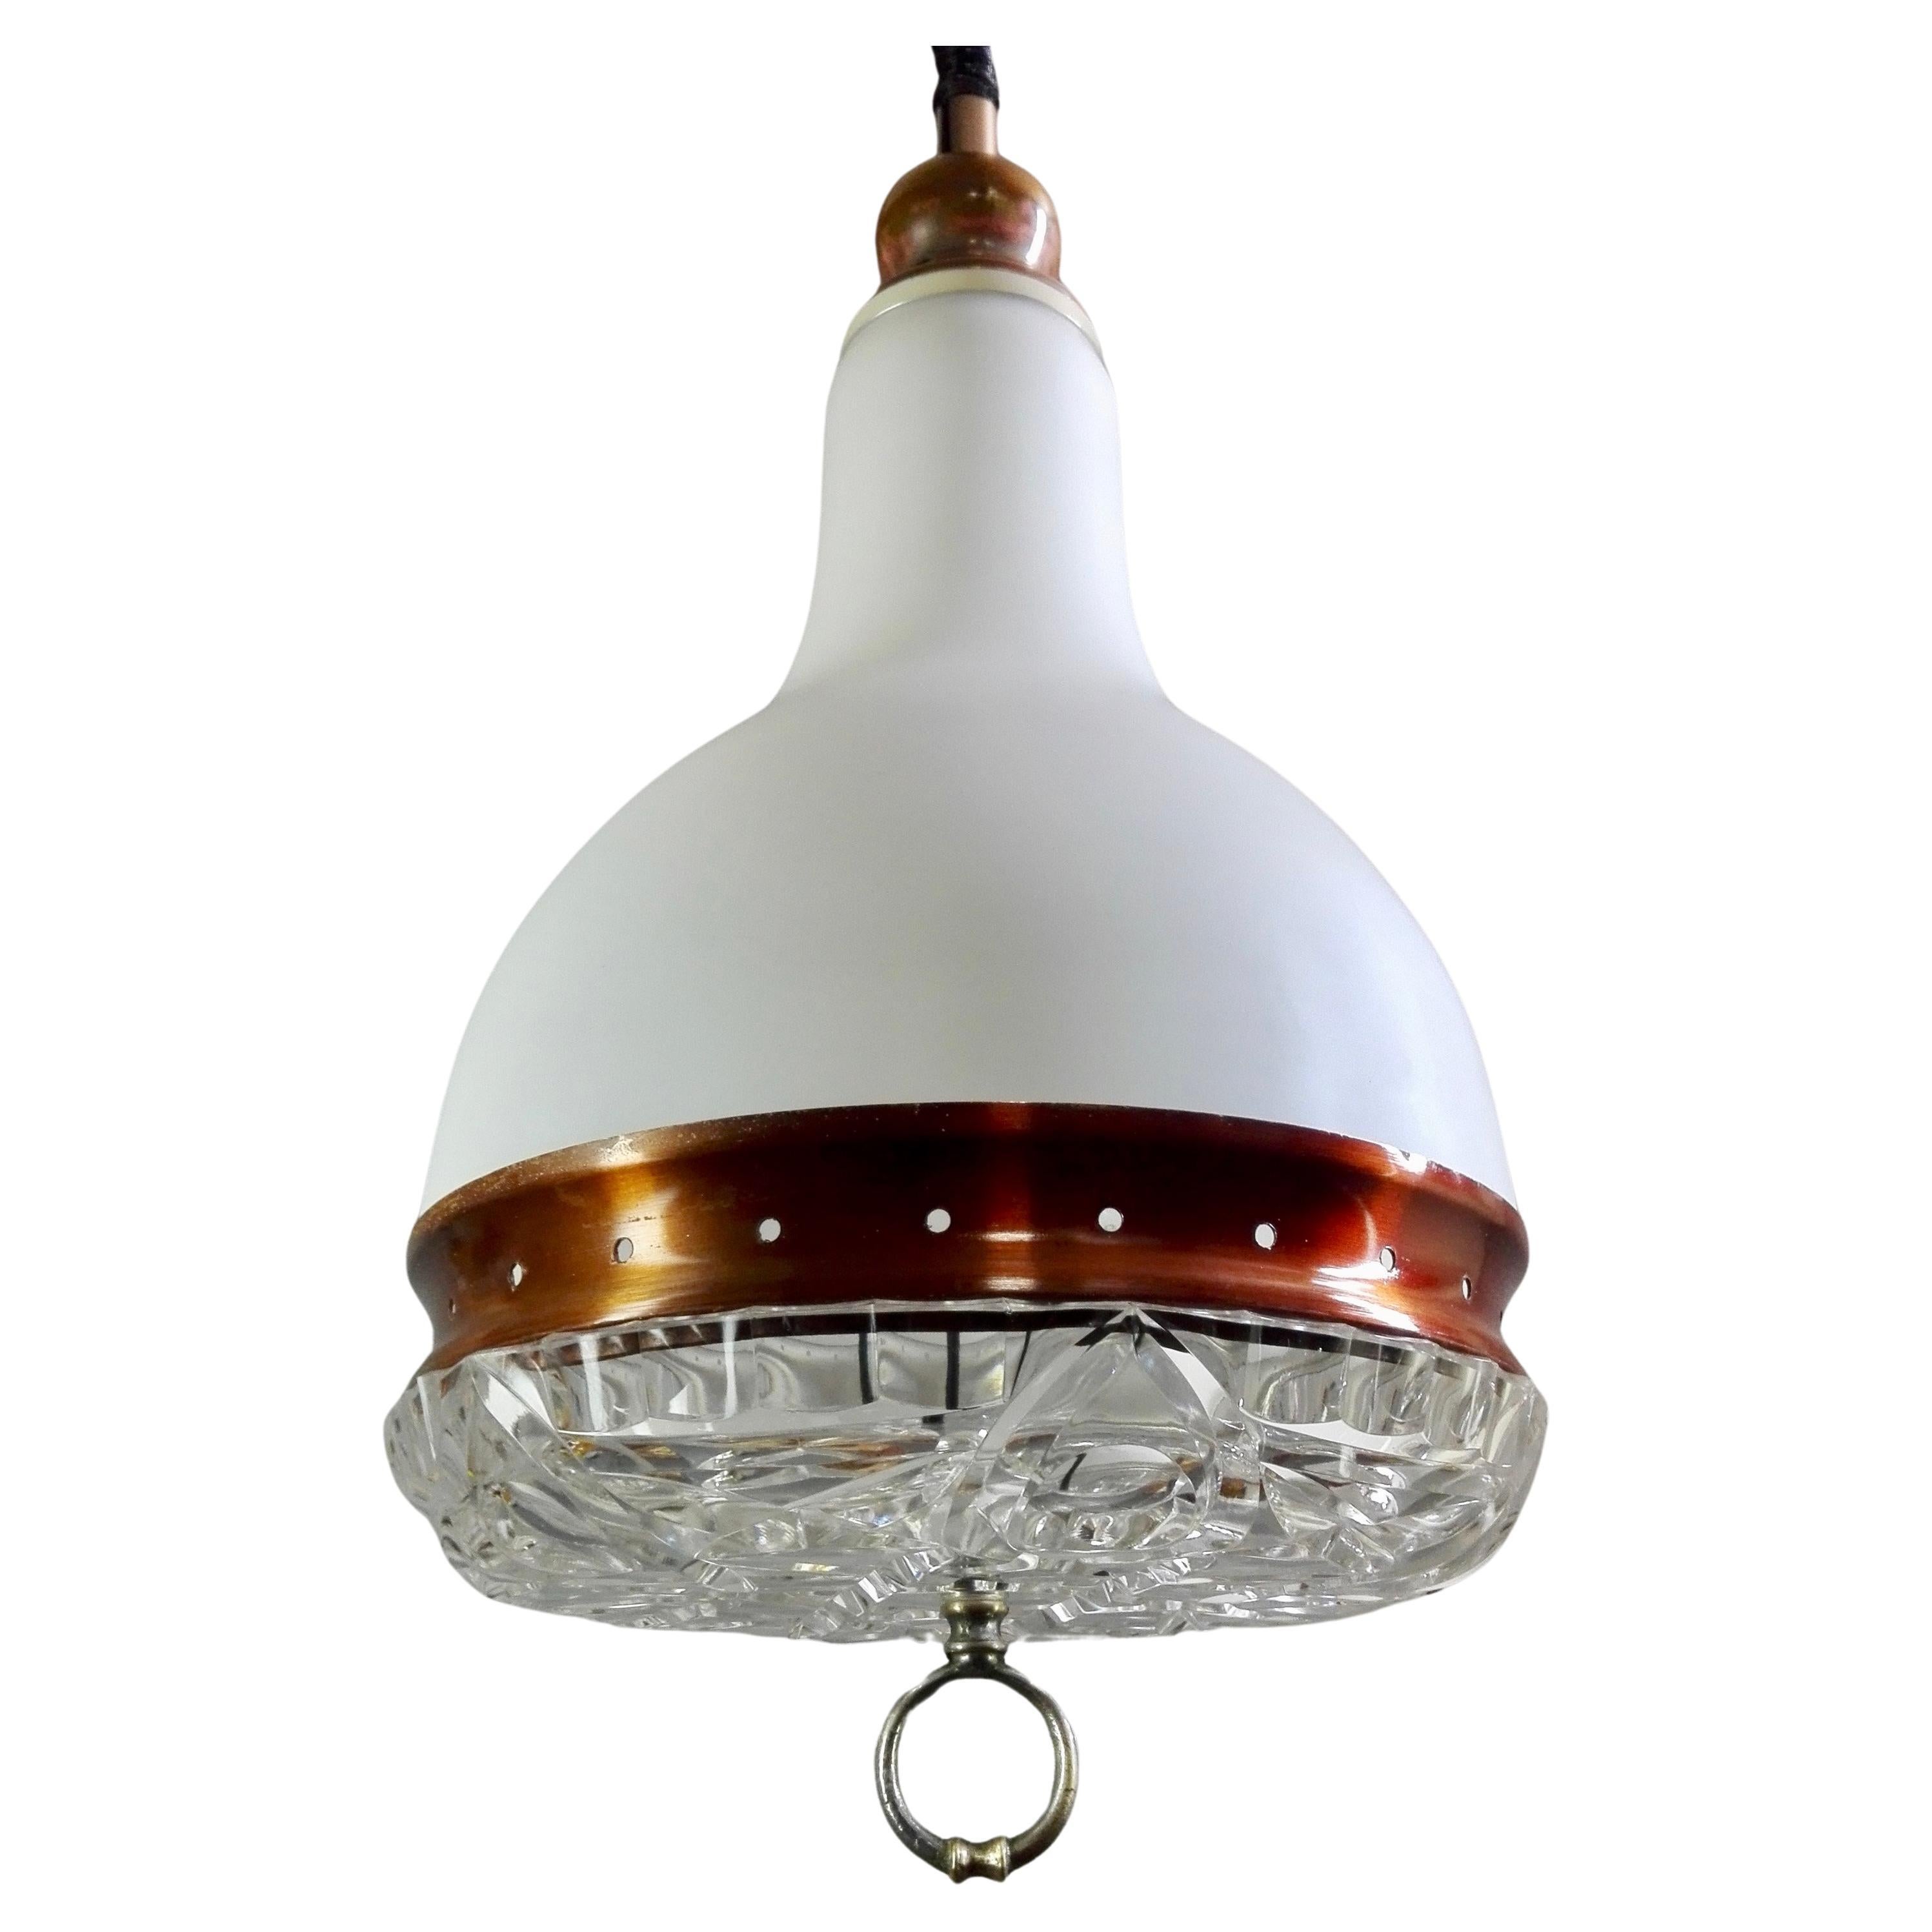 1960s Italian rise-and-fall glass and aluminum three-light pendant lamp. 